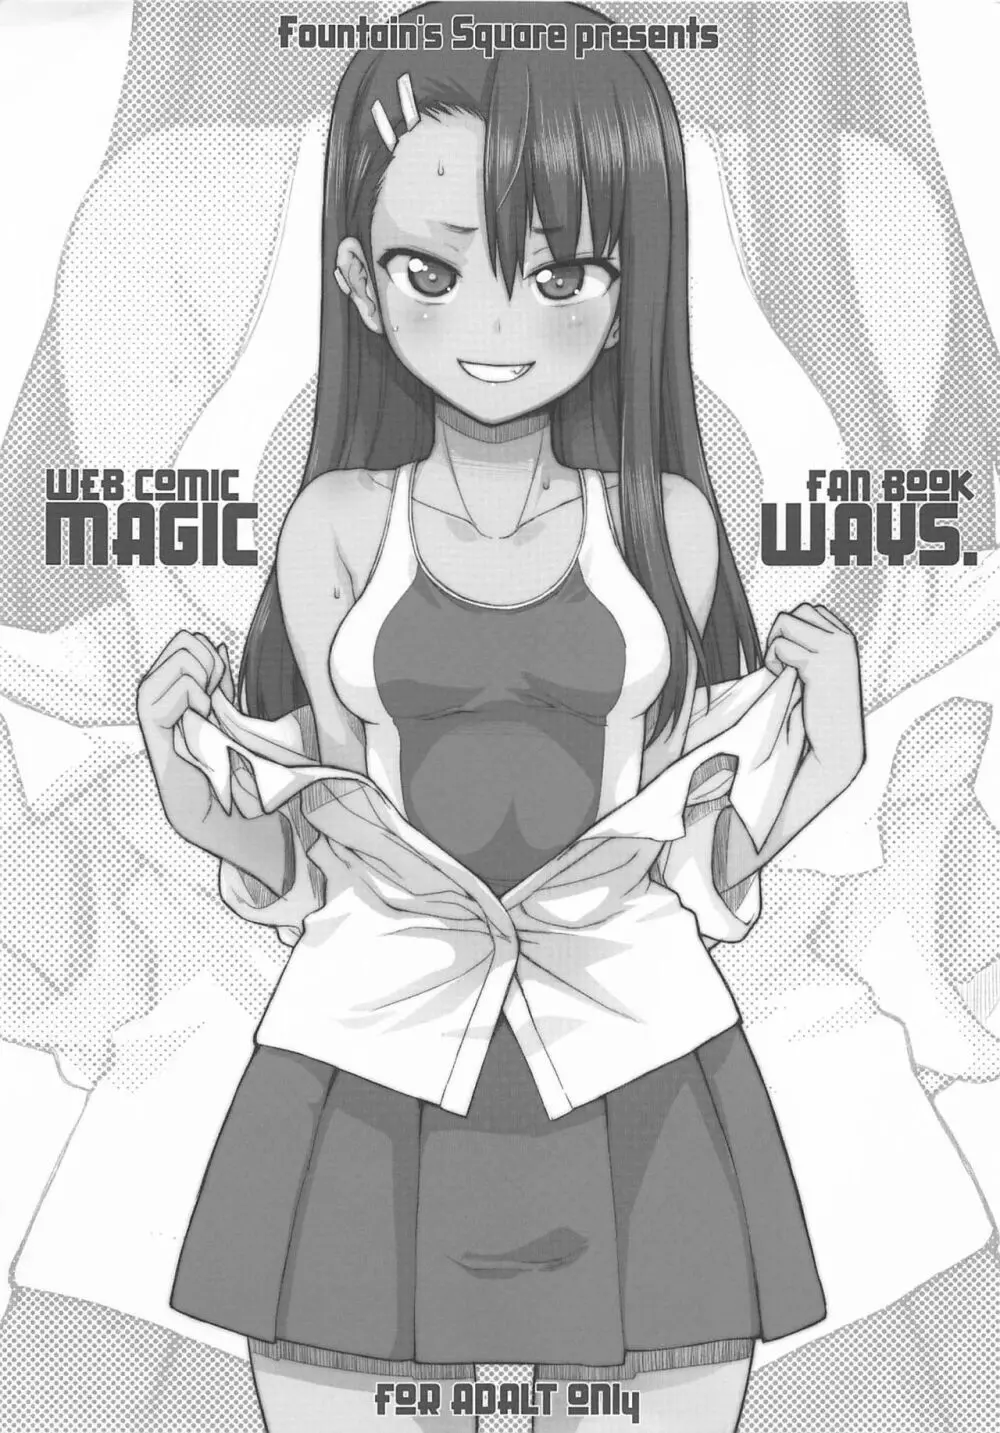 MAGIC WAYS. - page1